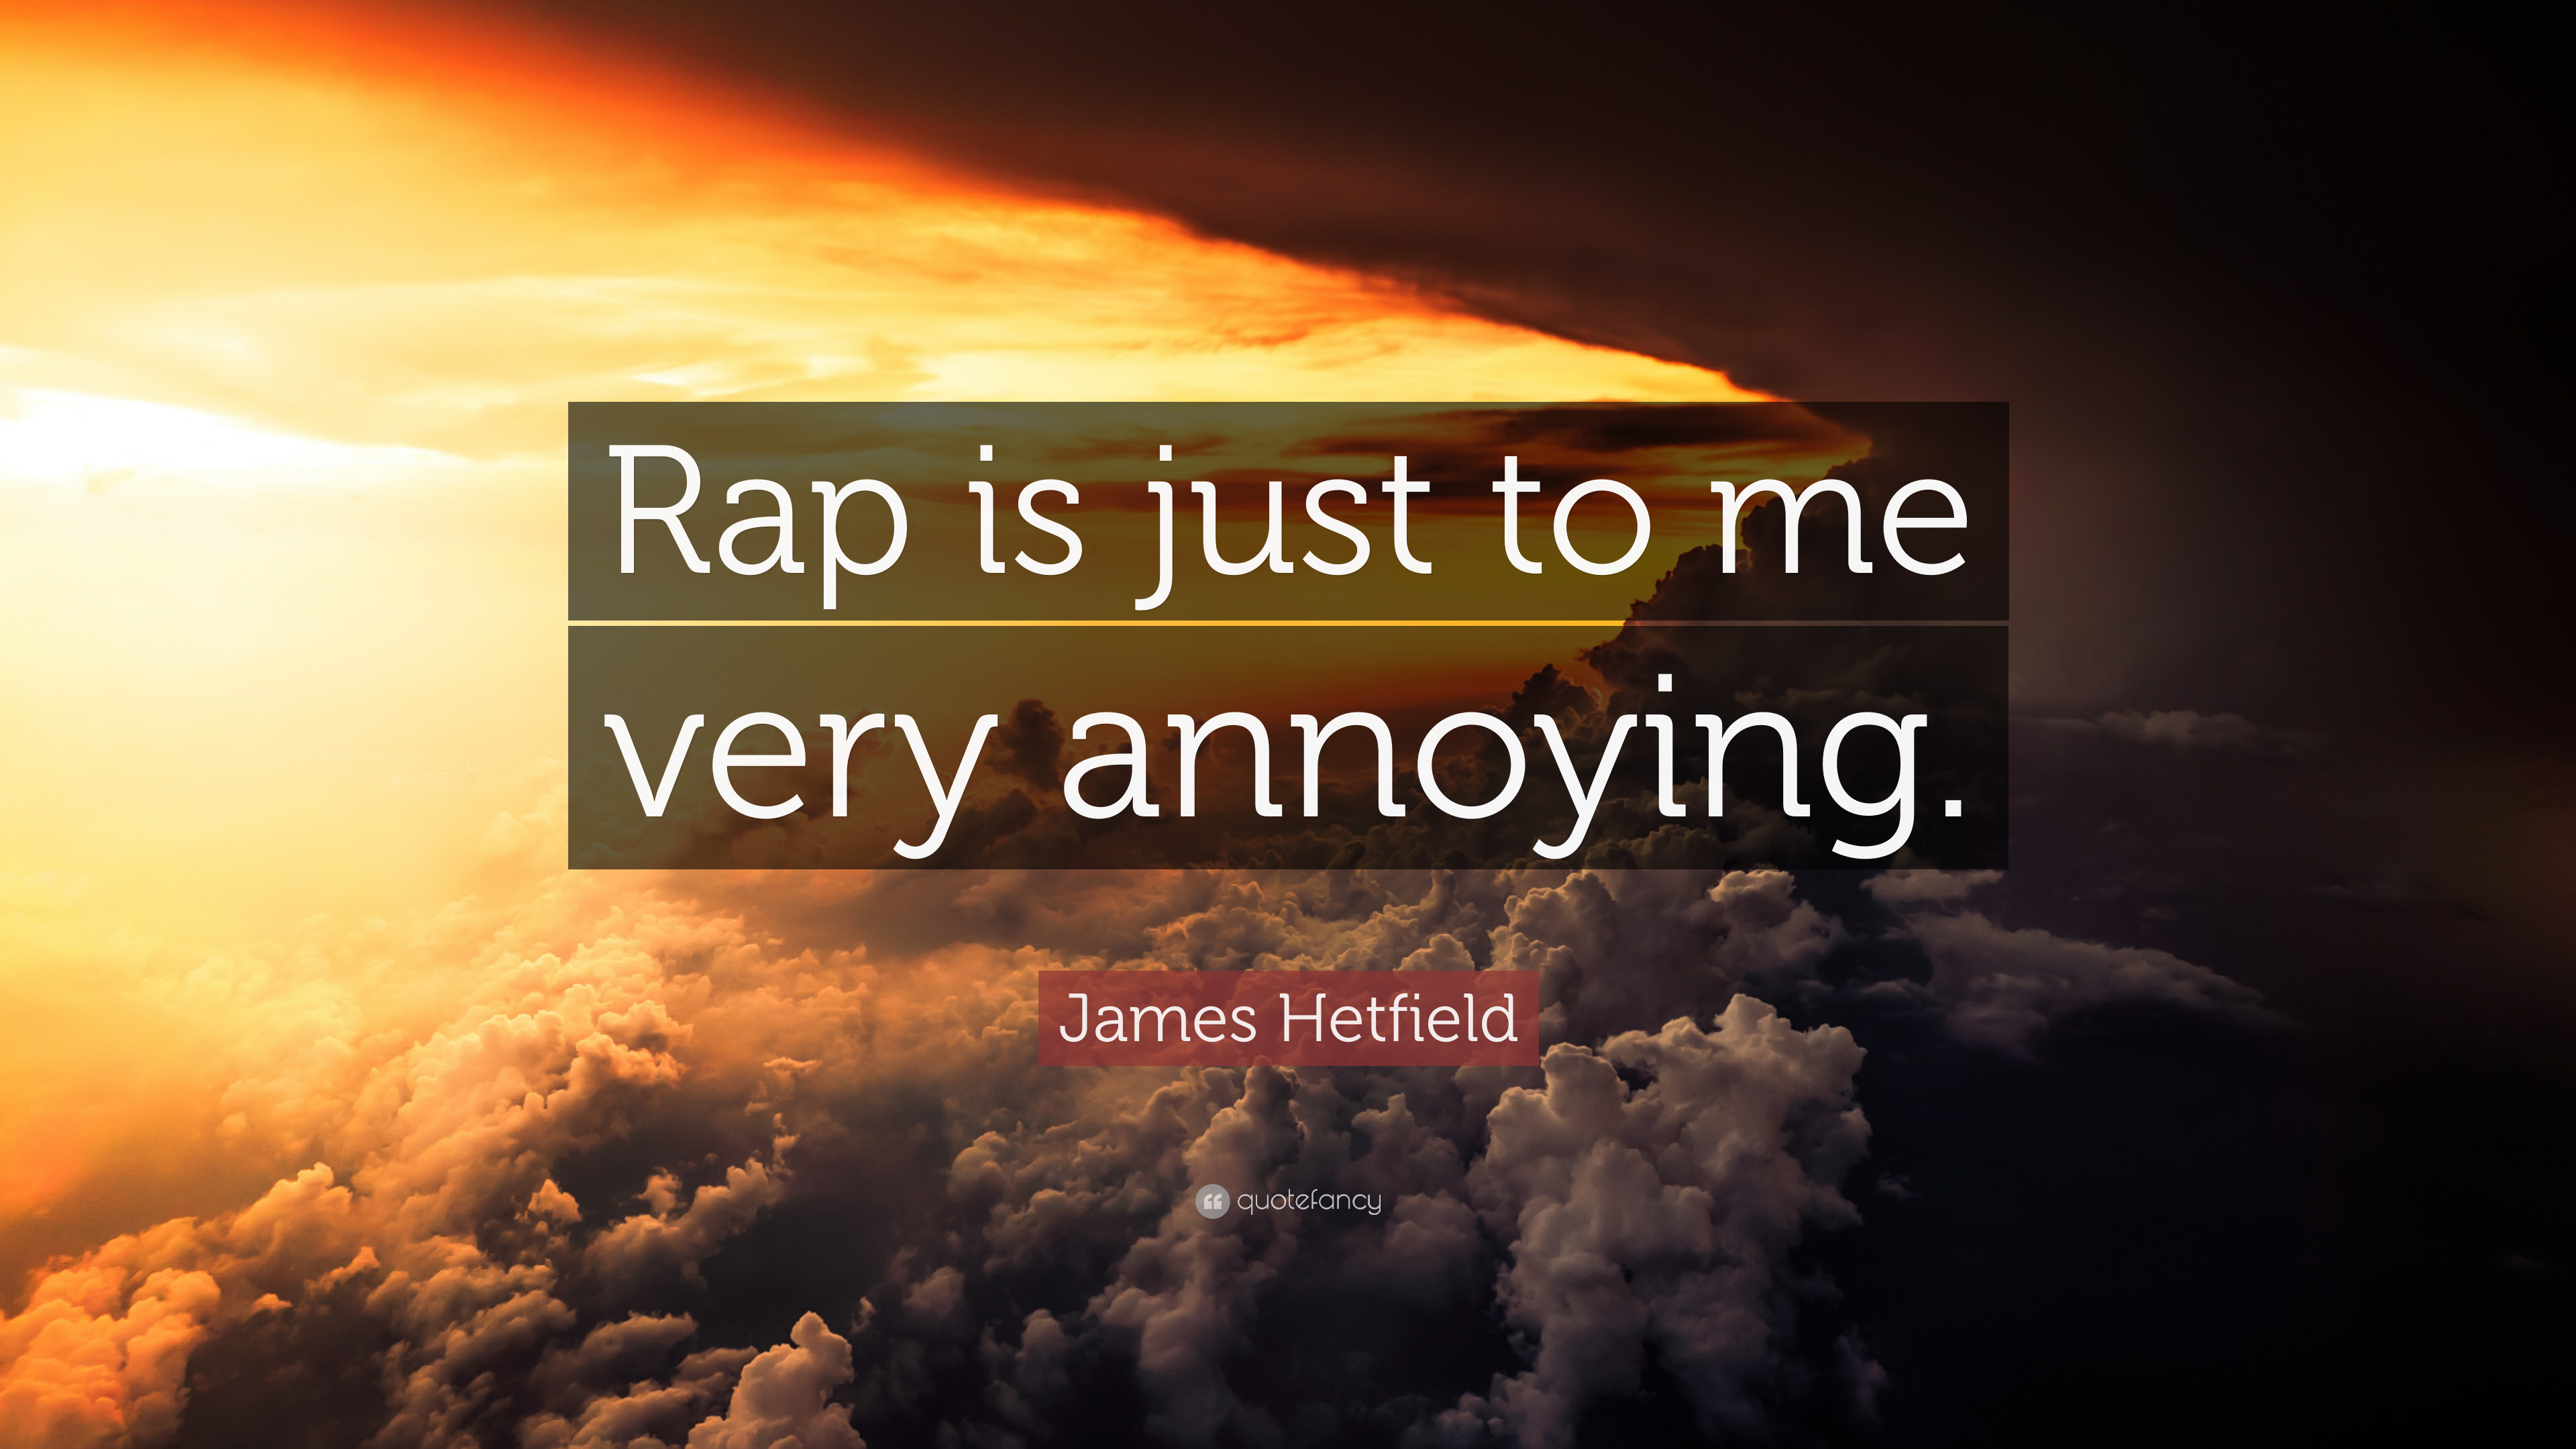 7 Inspirational James Hetfield Quotes